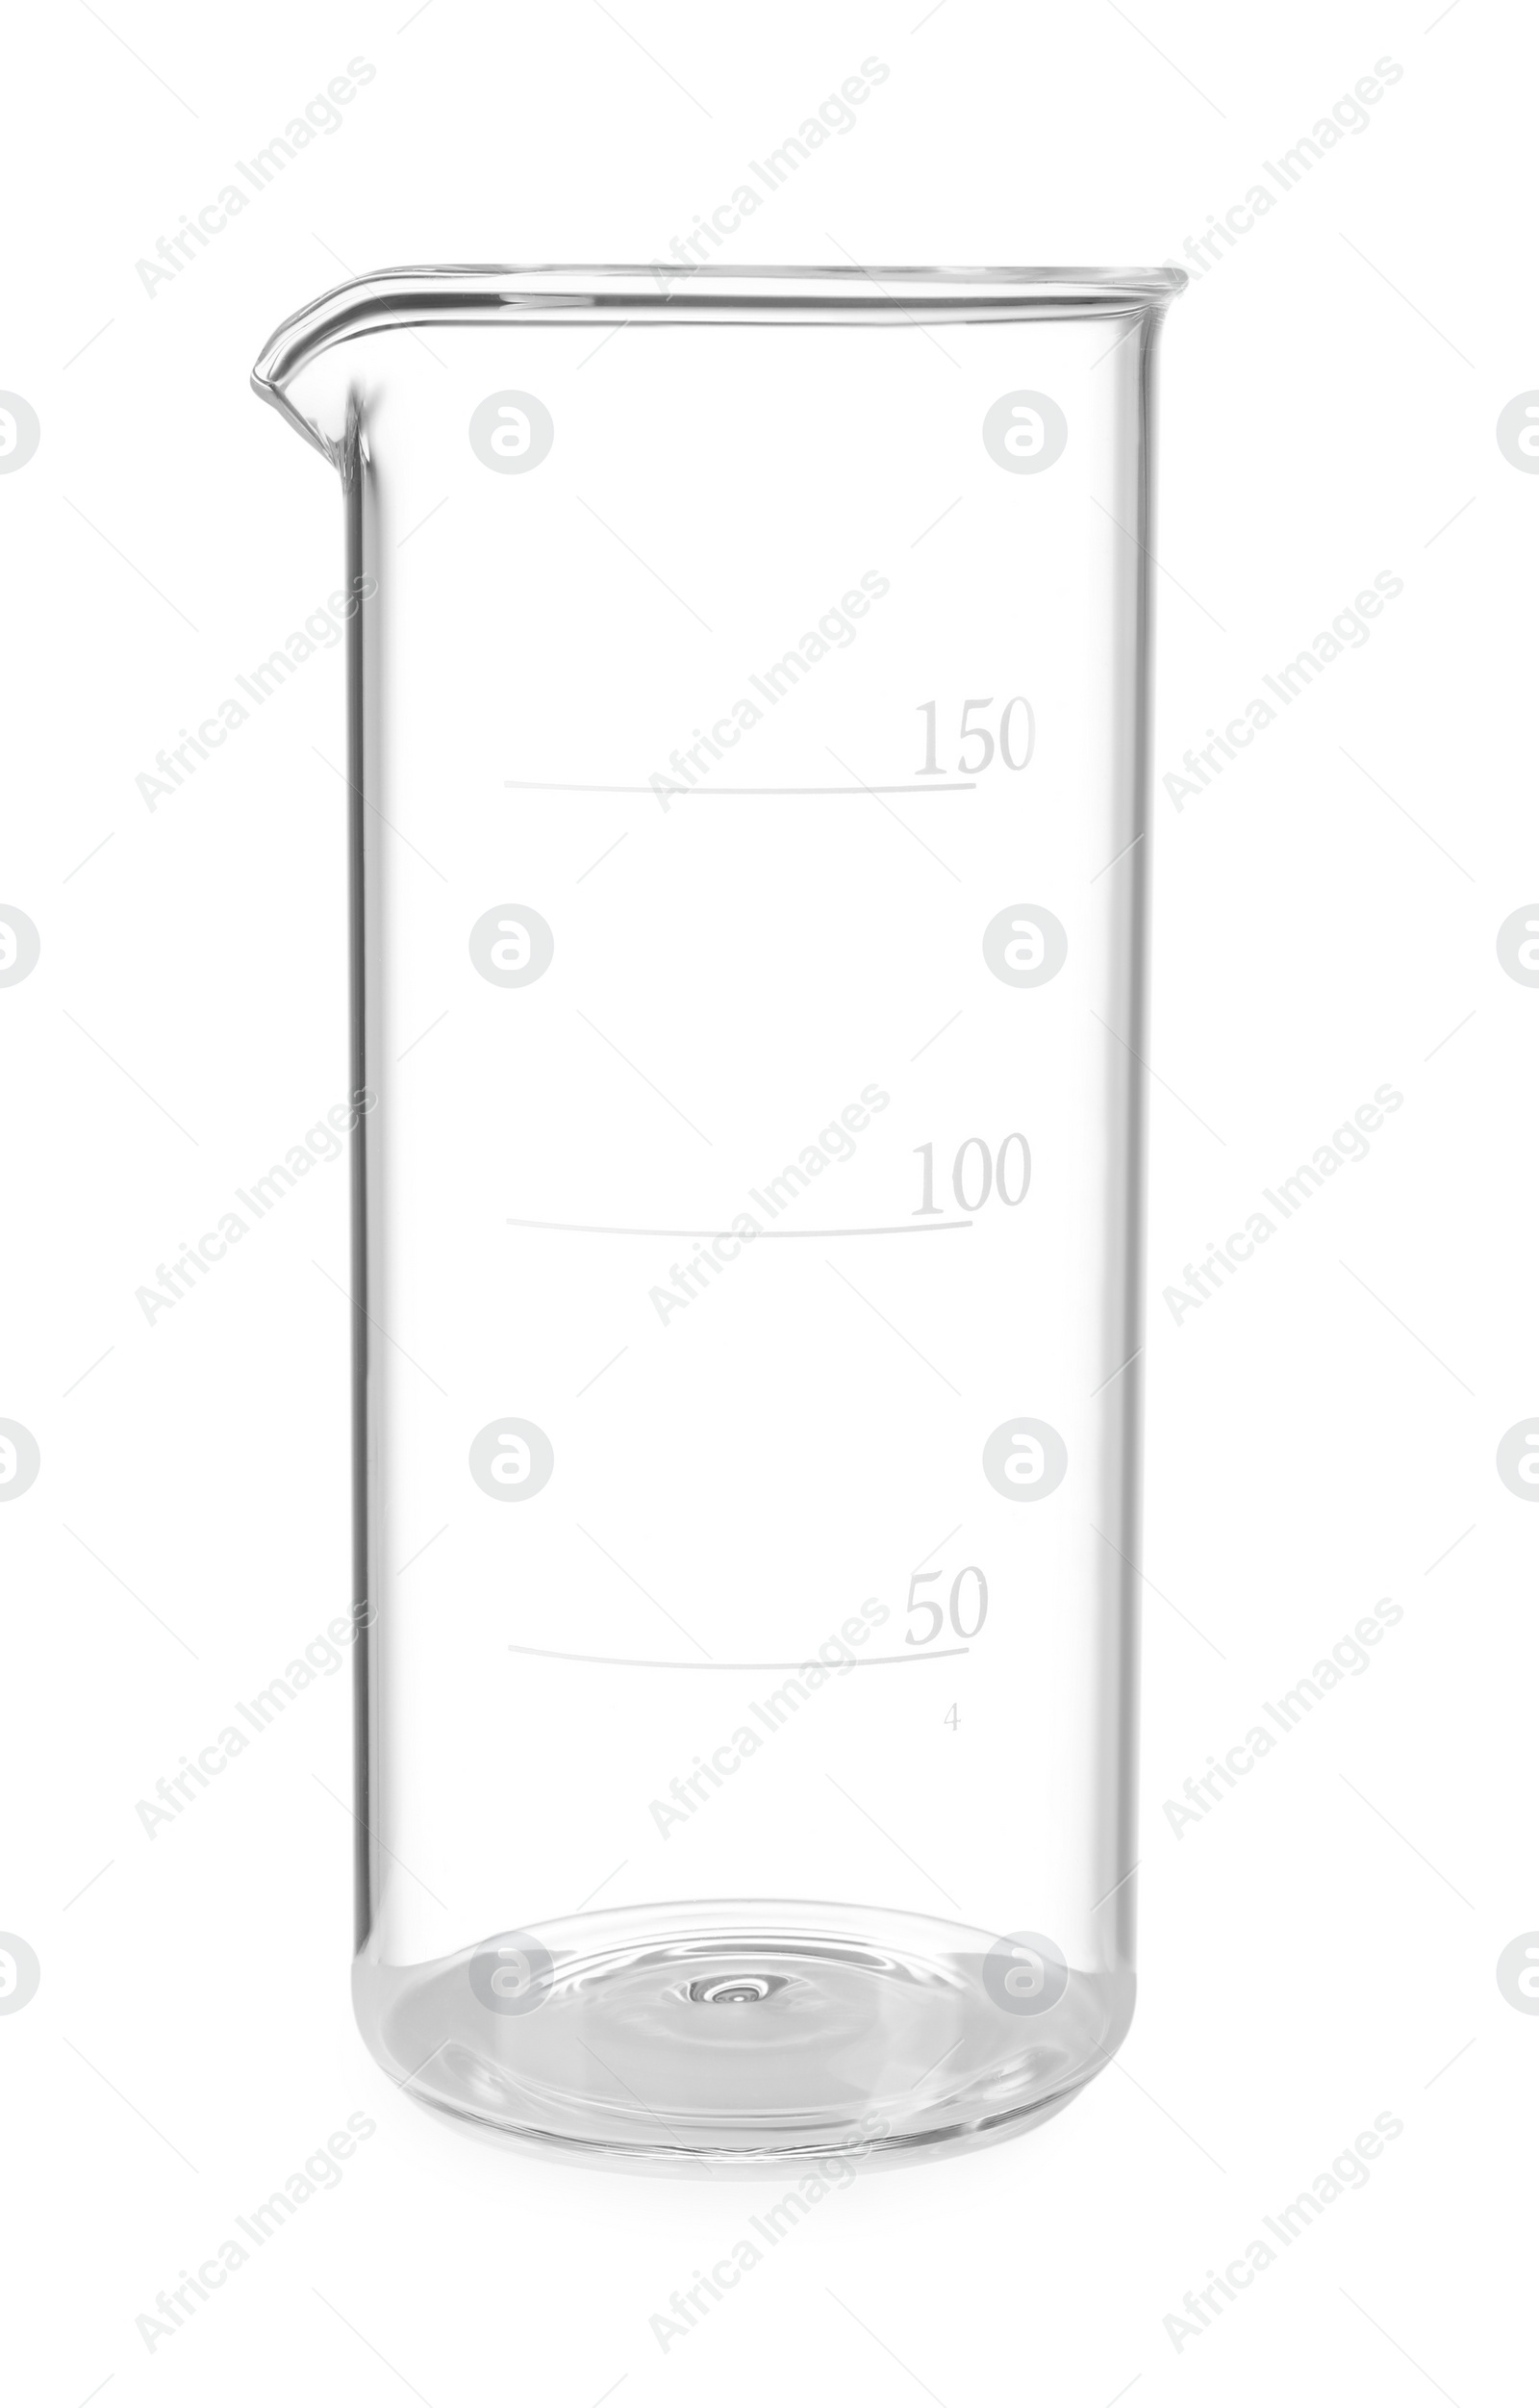 Photo of One empty glass beaker isolated on white